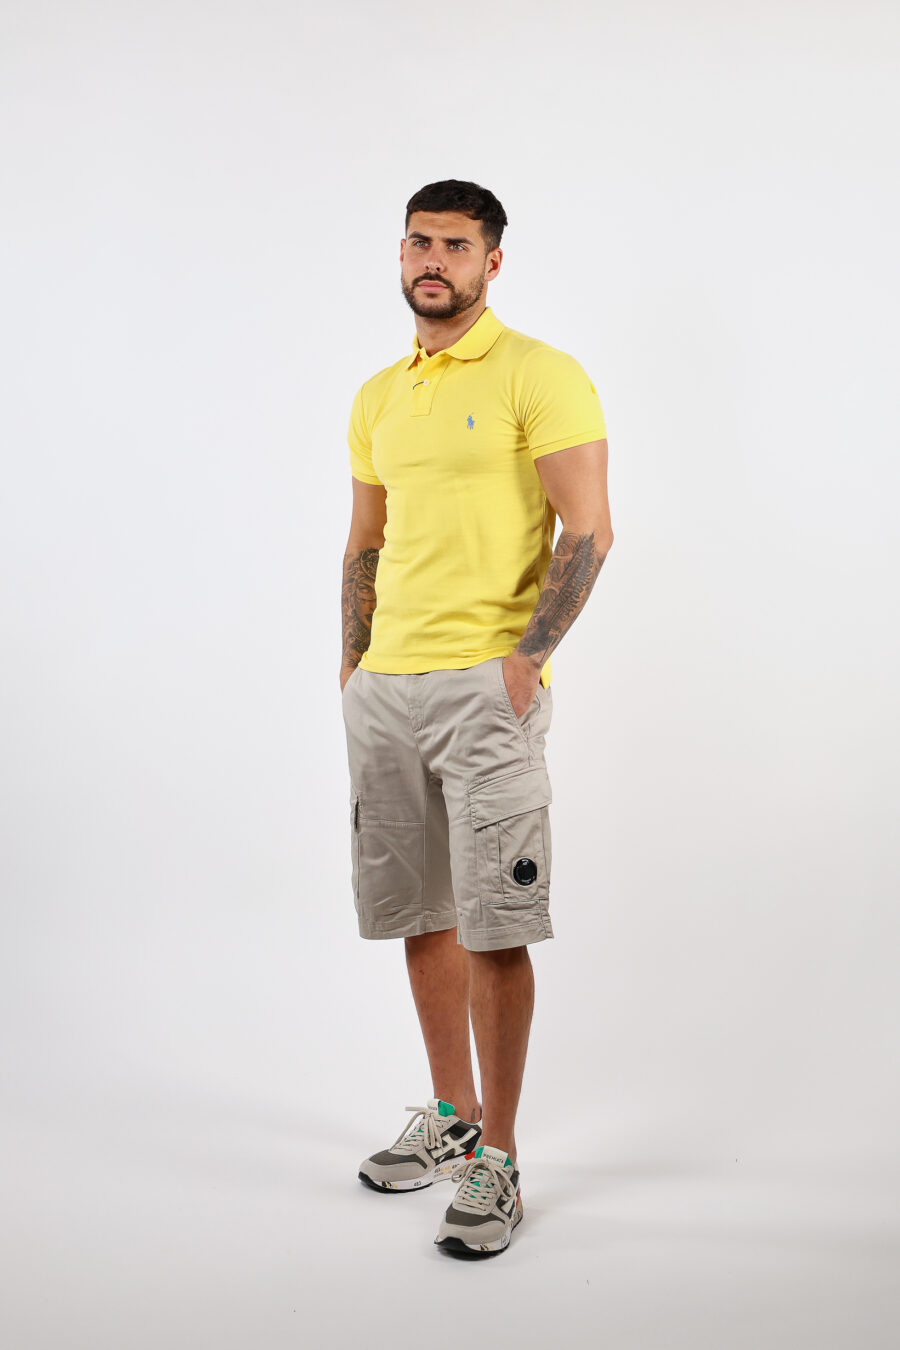 Camiseta amarilla y azul con minilogo "polo" - BLS Fashion 193